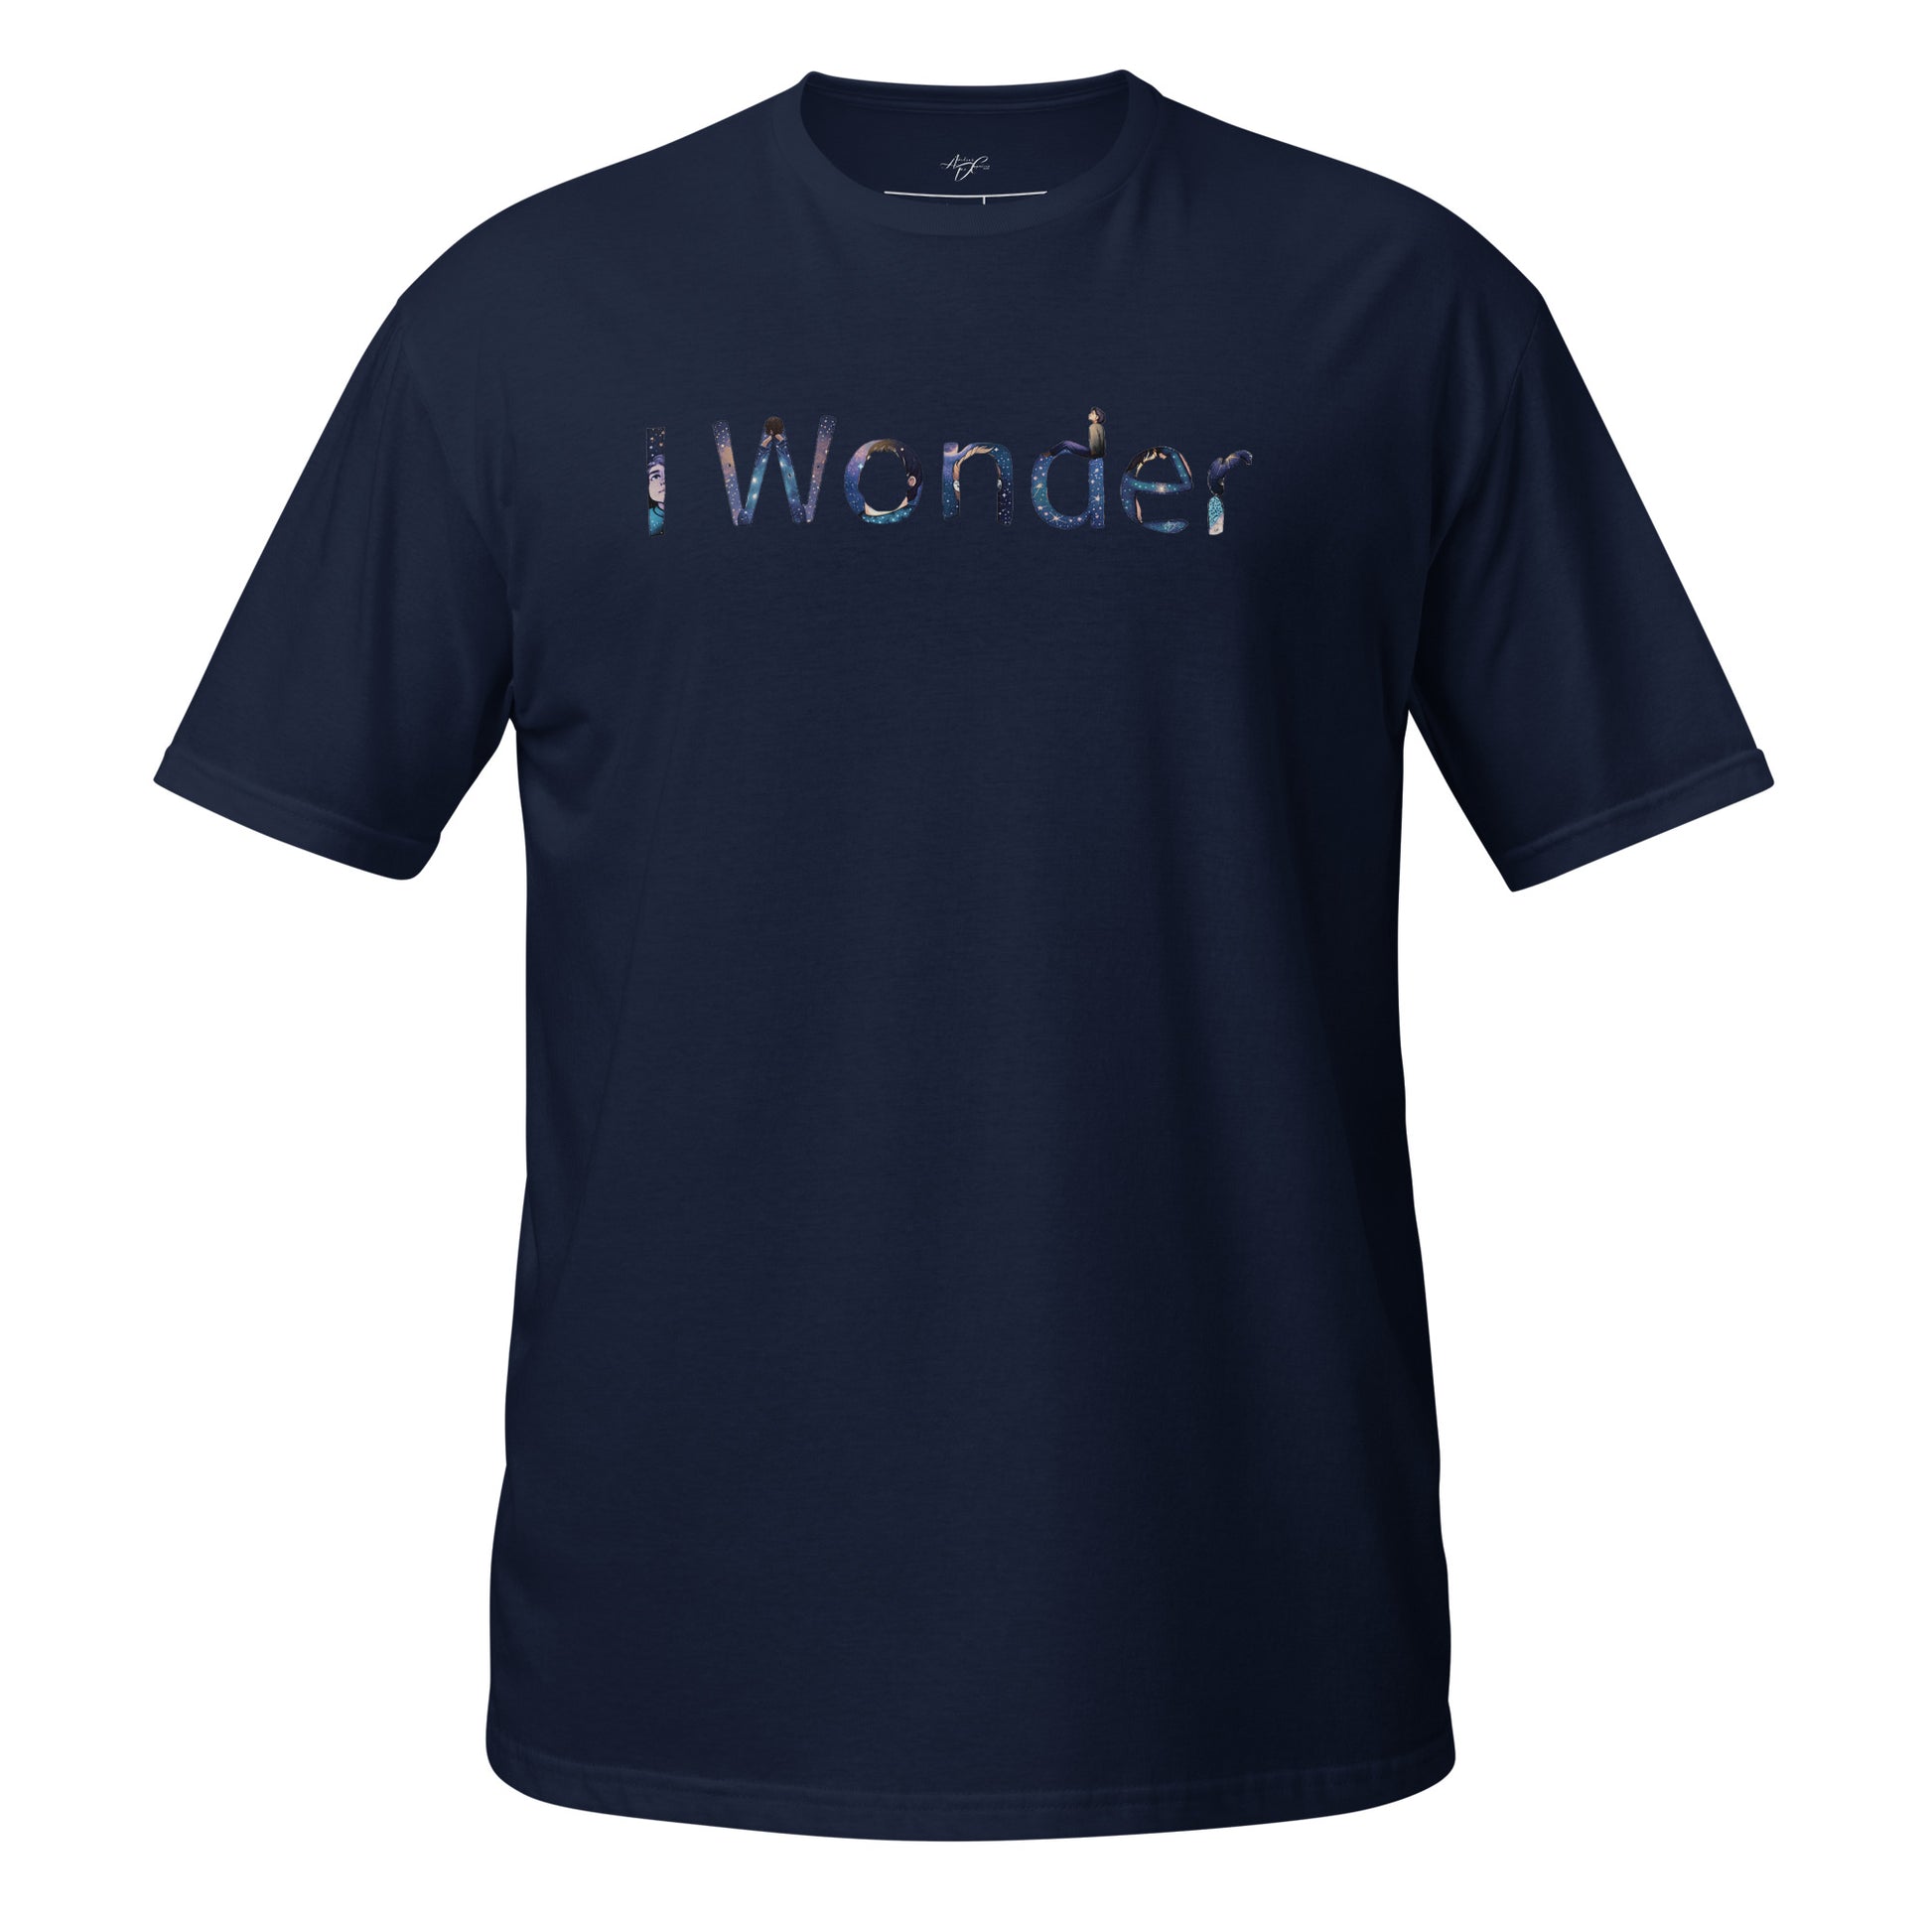 I Wonder - Cosmic Reflection T-Shirt